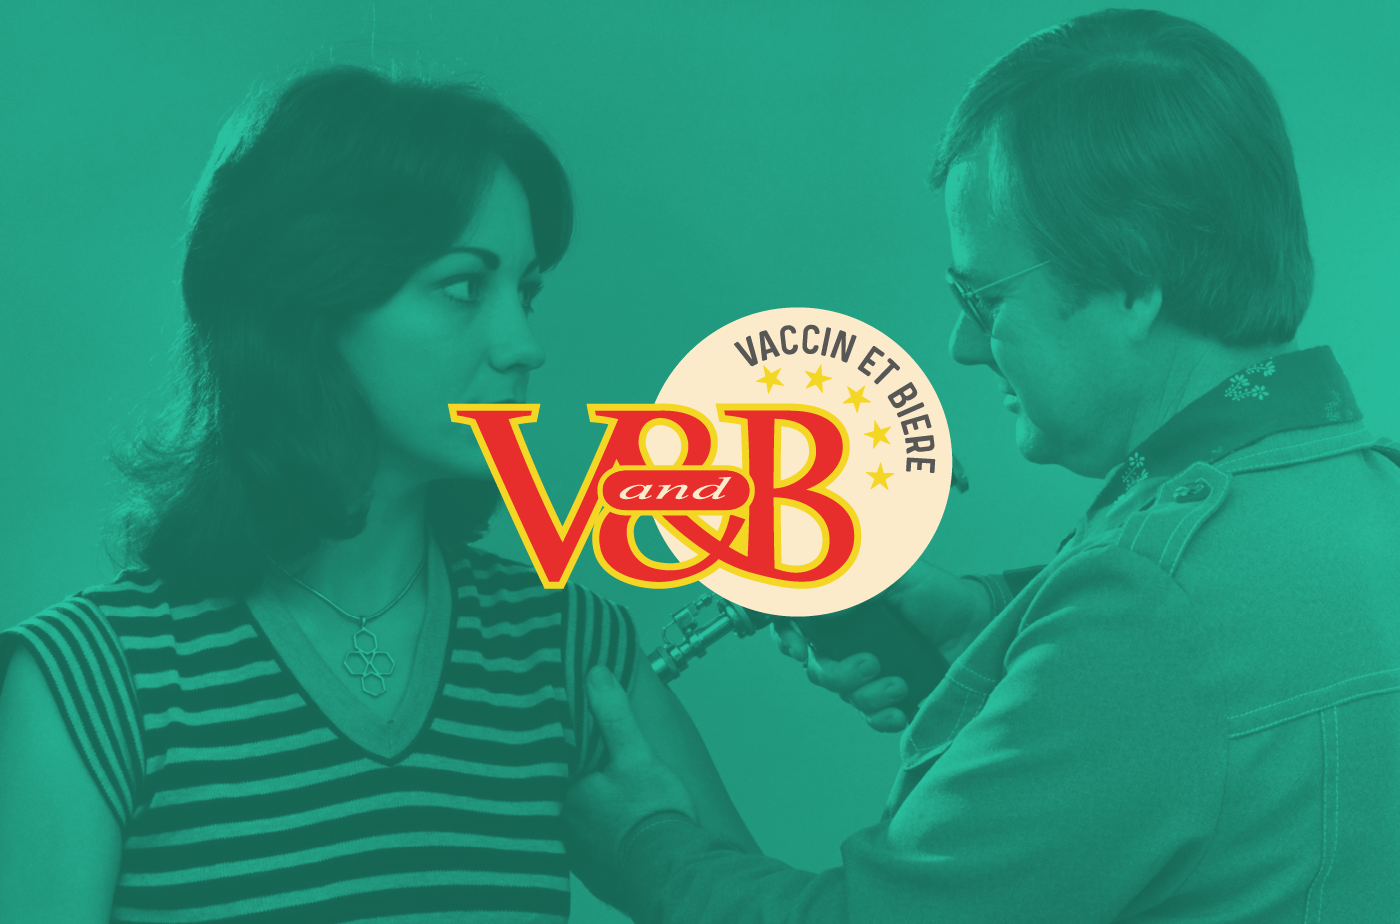 V and B Vaccin et Bière